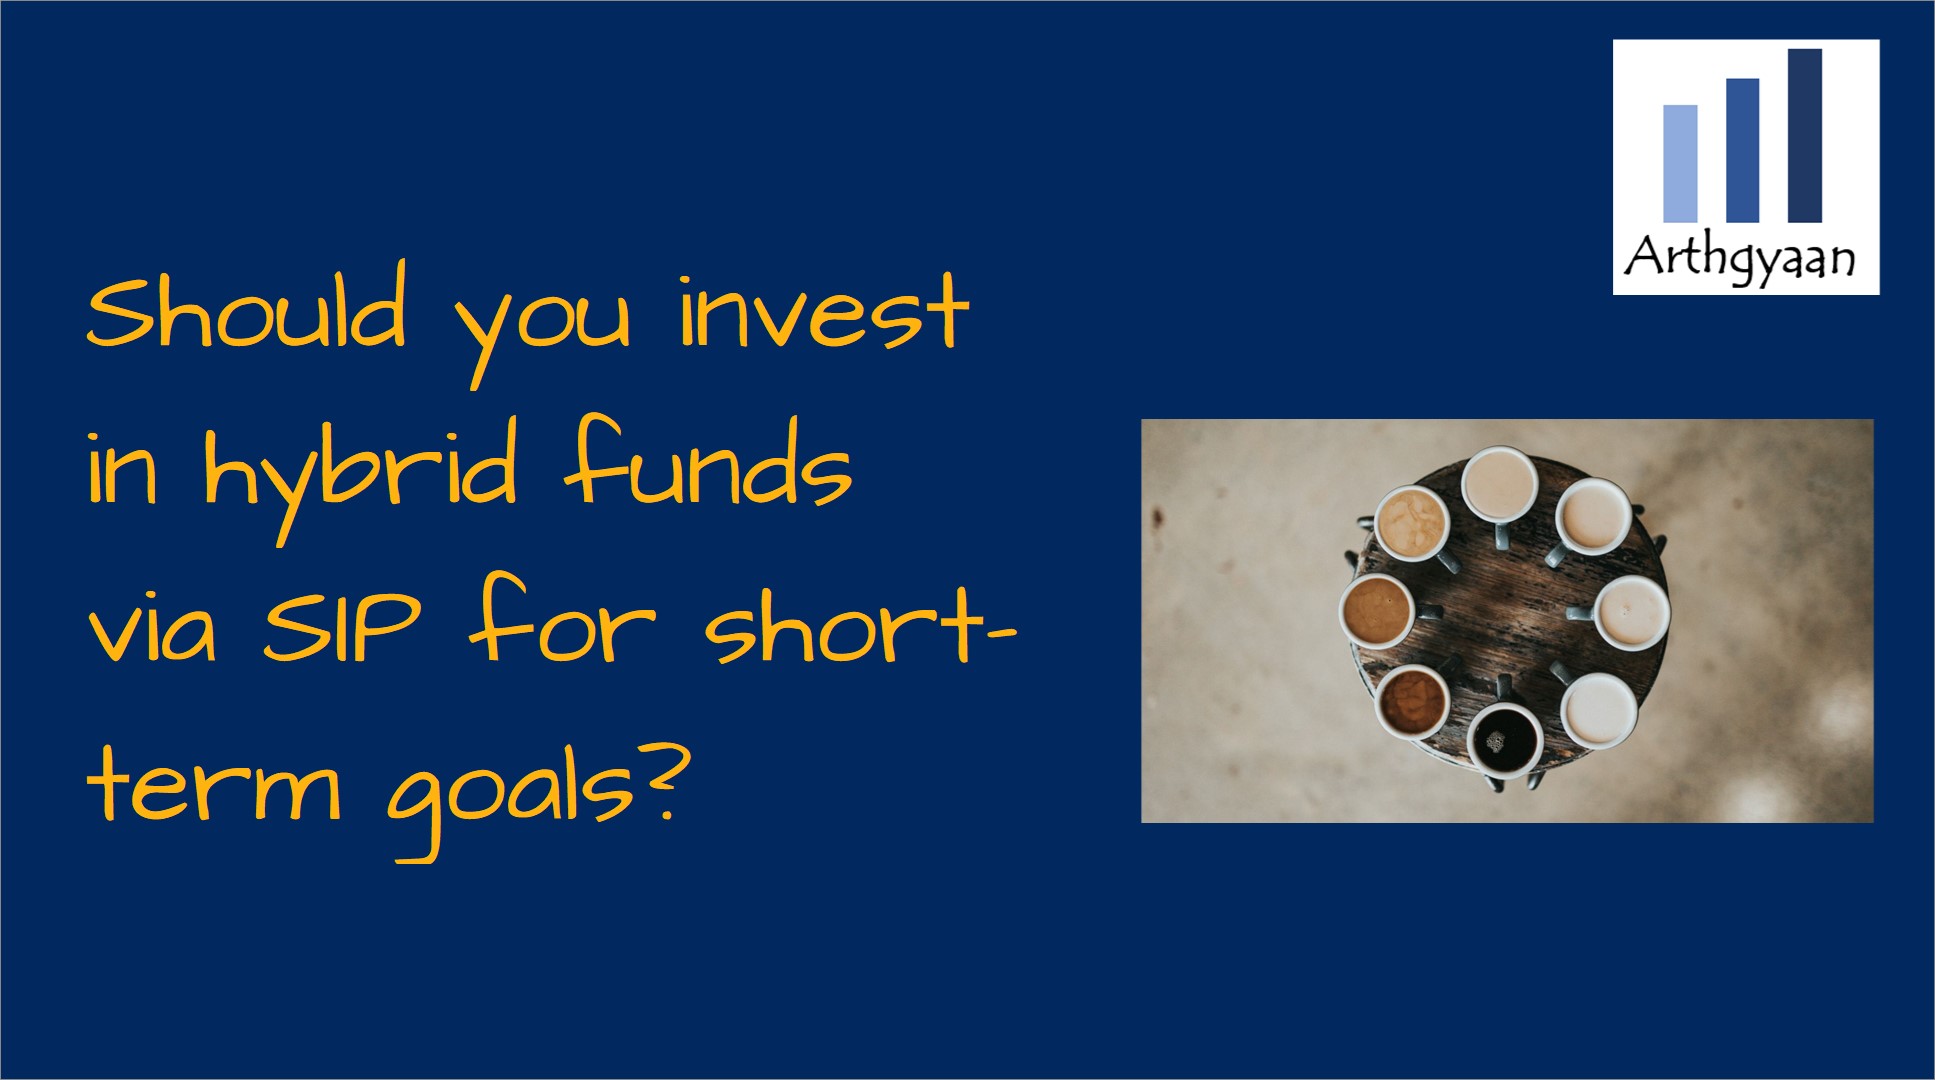 Should you invest in hybrid funds via SIP for short-term goals?